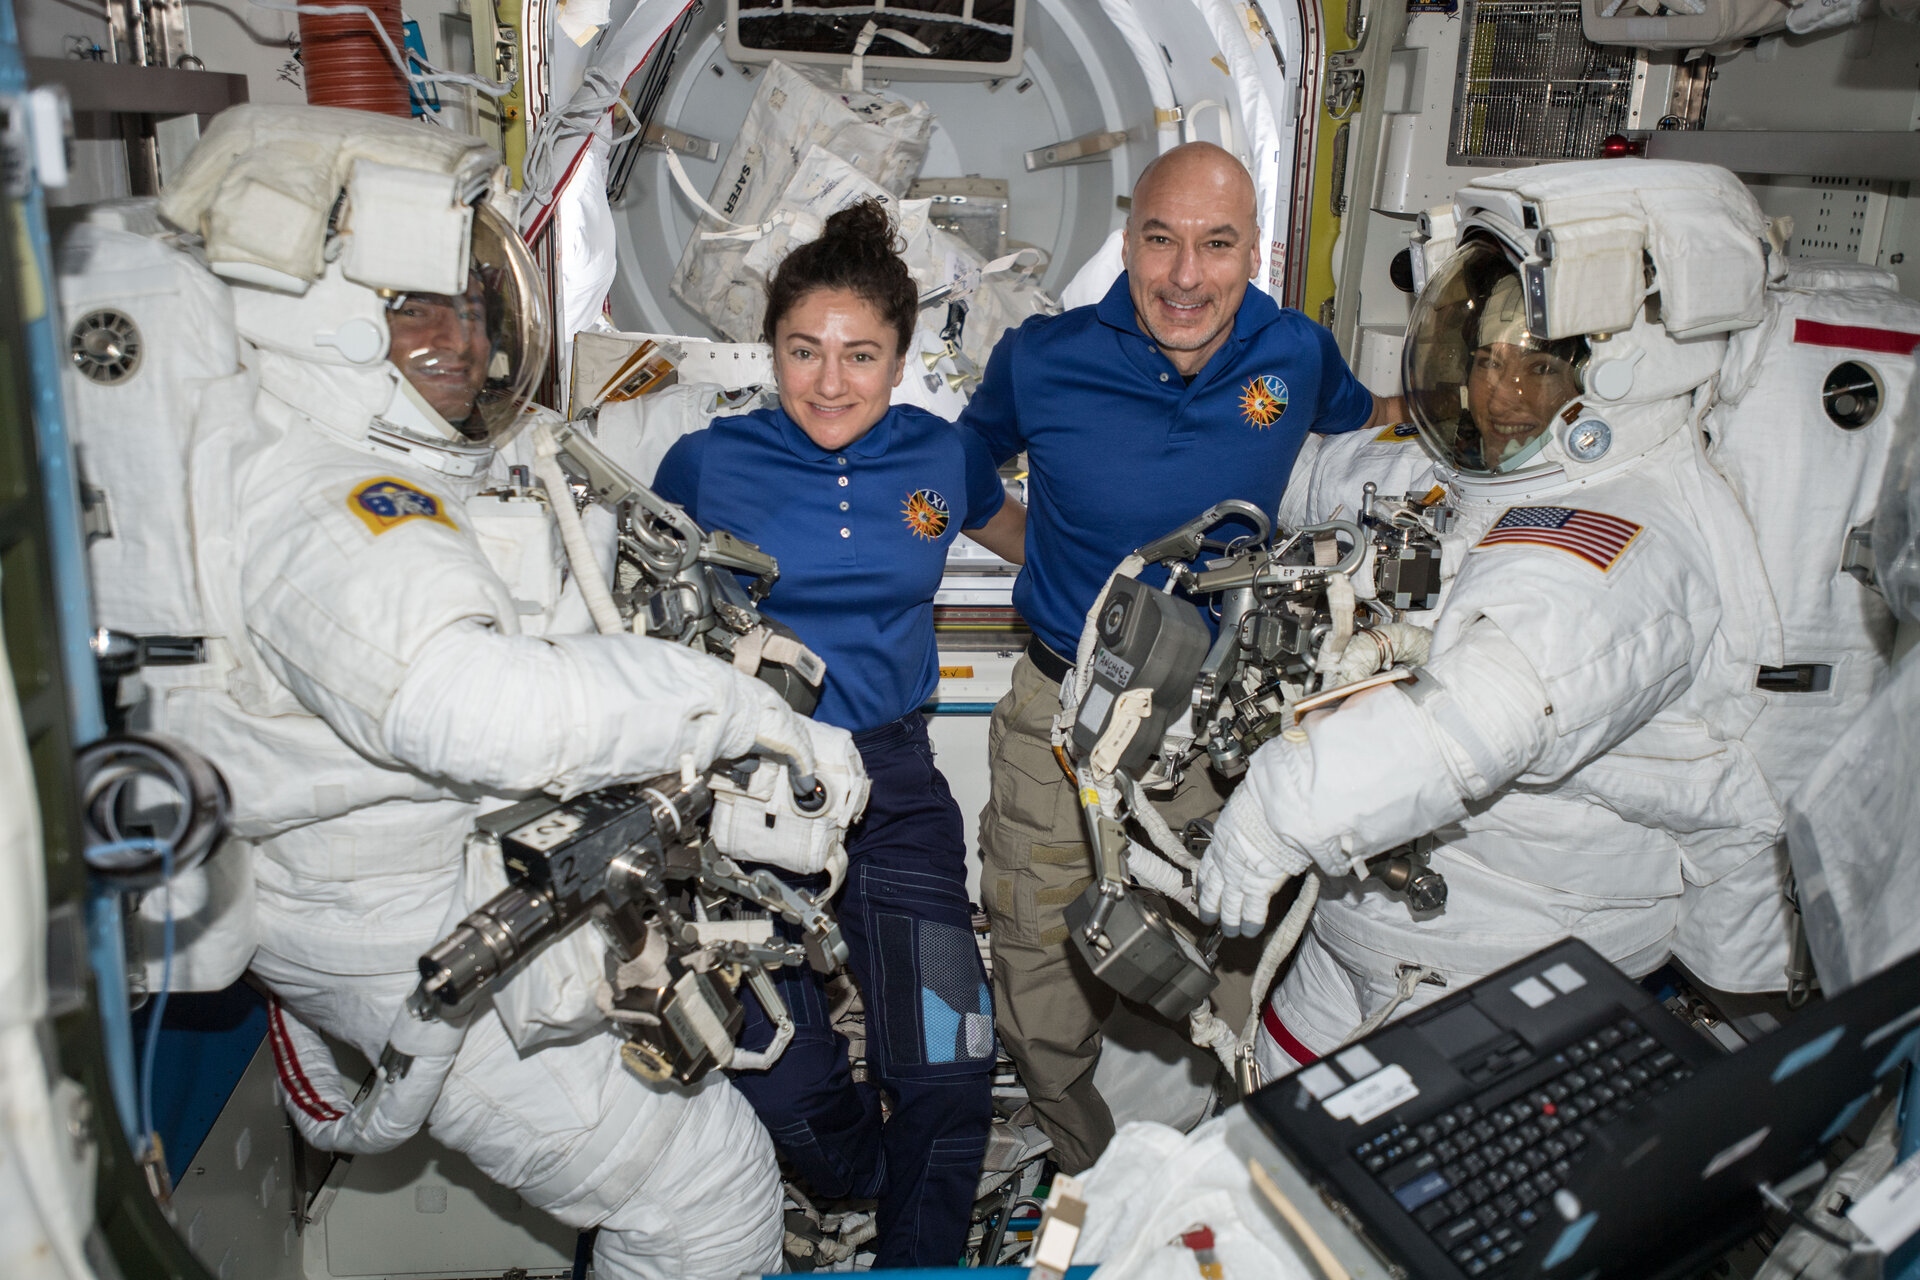 ESA astronaut Luca Parmitano assists spacewalkers in the Quest airlock